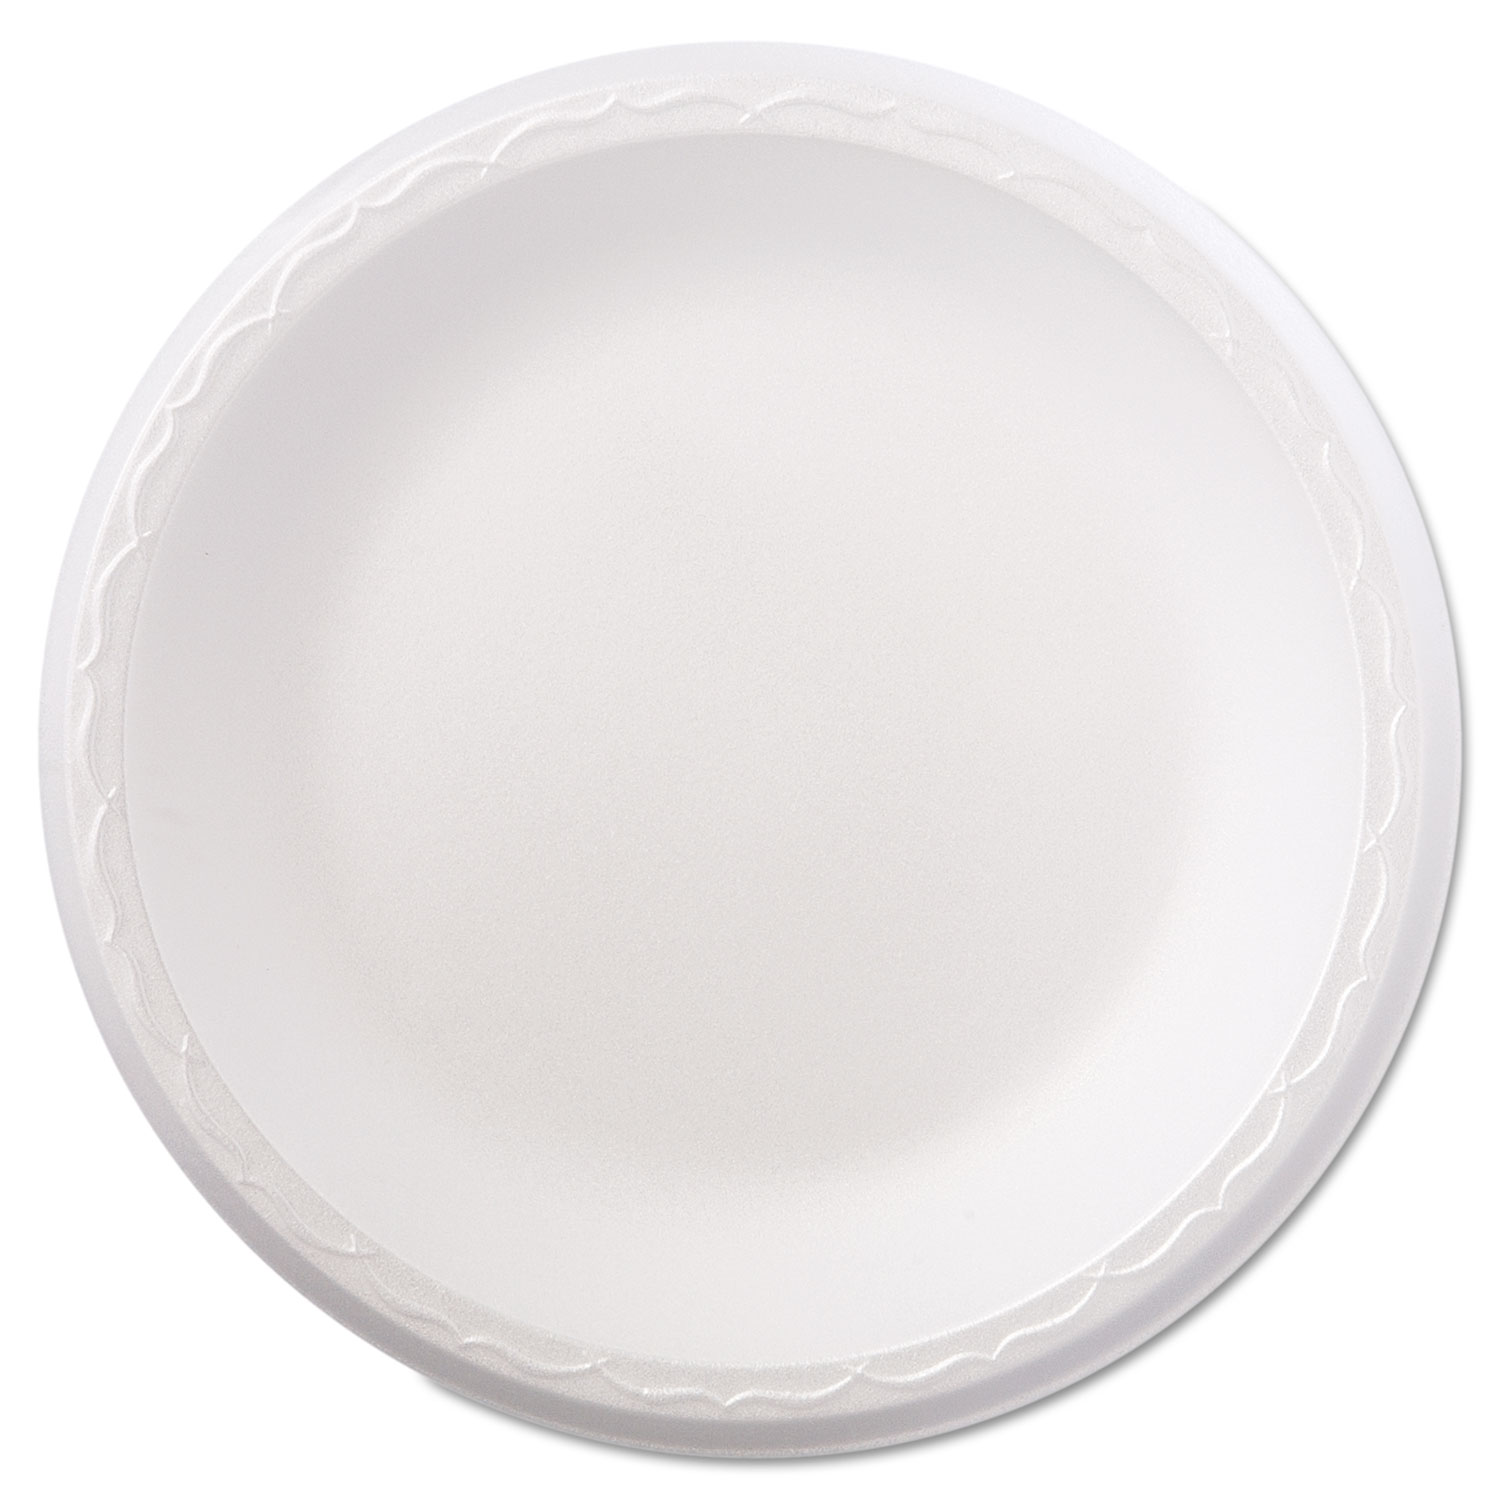  Genpak 80900--- Foam Dinnerware, Plate, 8 7/8 dia, White, 125/Pack, 4 Packs/Carton (GNP80900) 